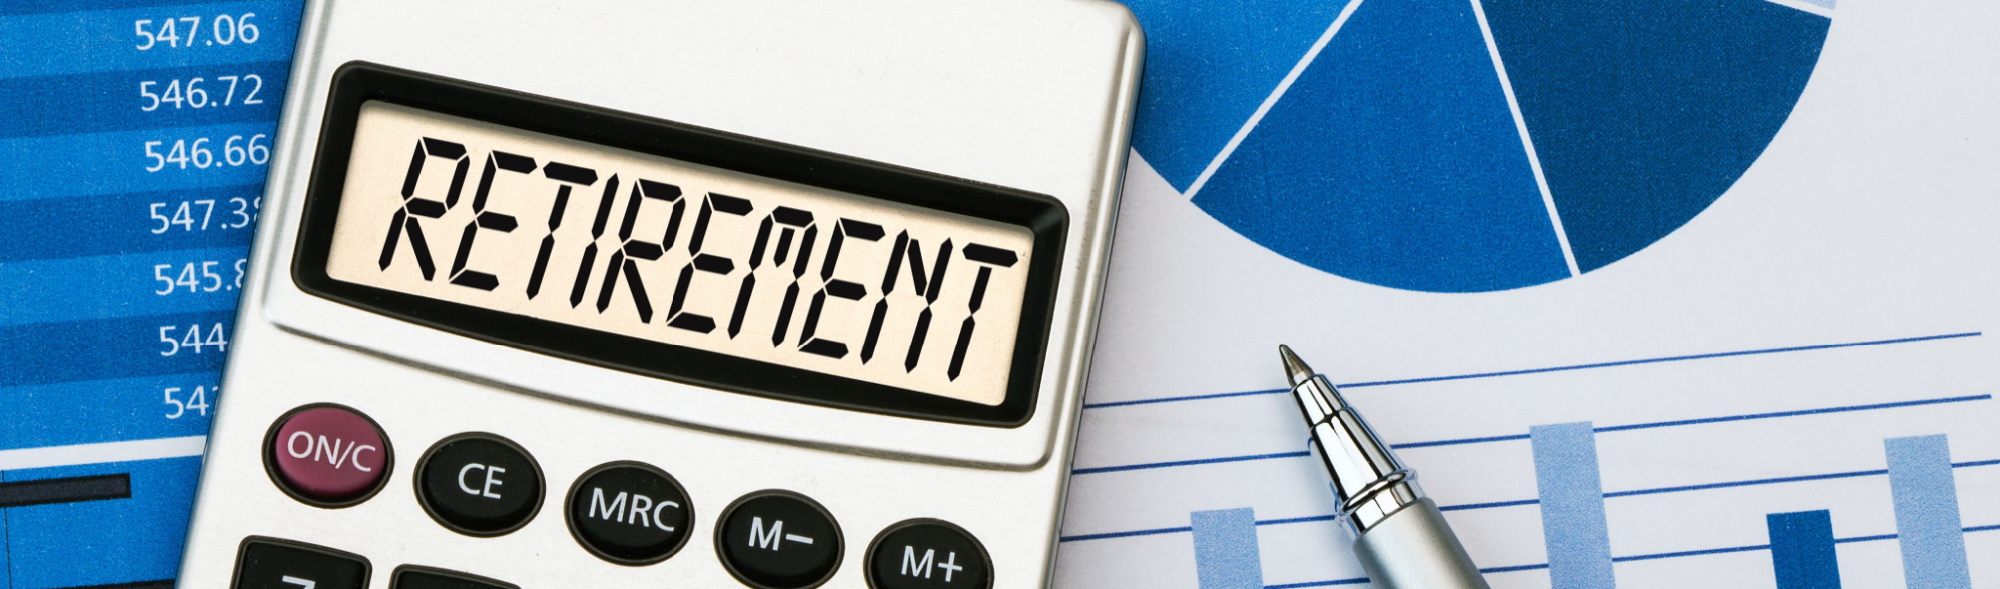 Retirement Calculator Creve Coeur, MO | Financial Advisors | Retirement Consultant | Wealth Management Near Creve Coeur